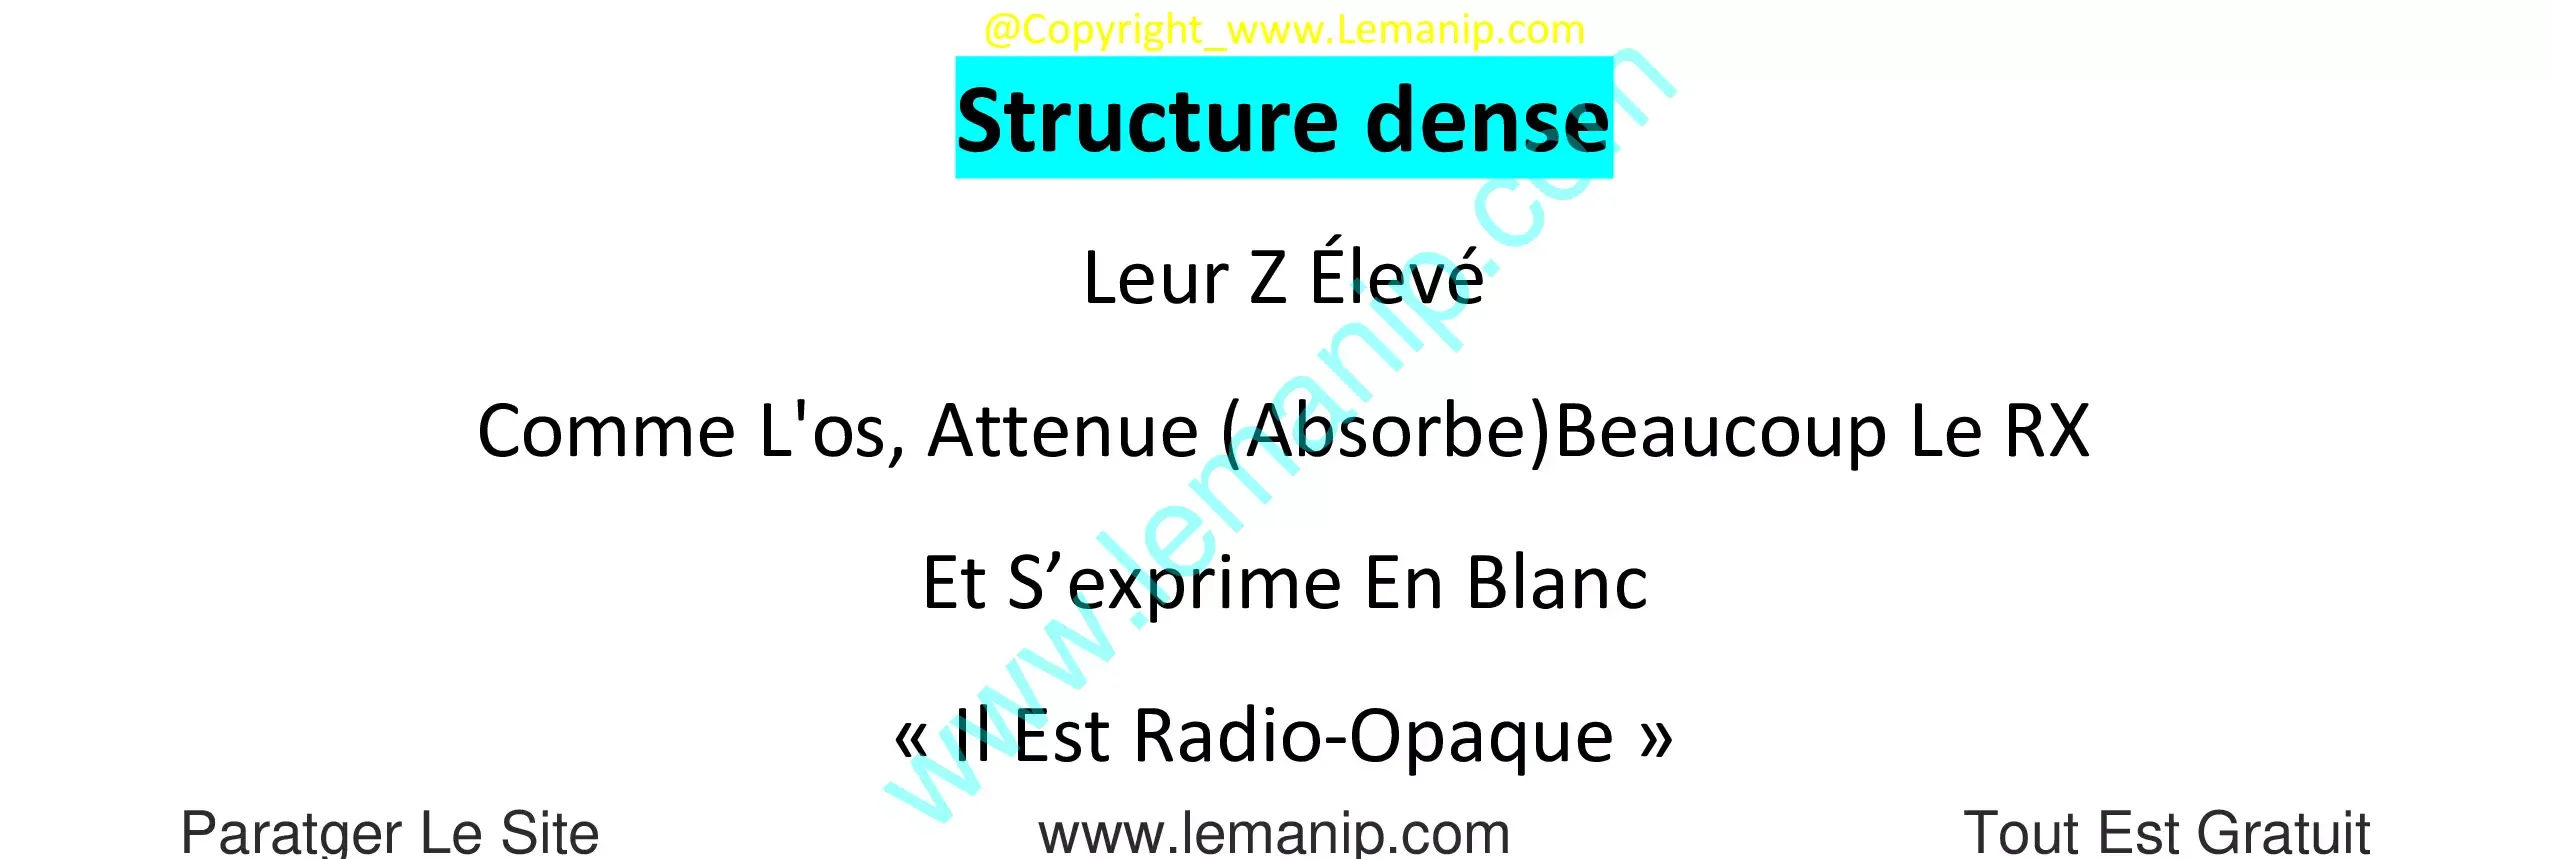 Structure dense